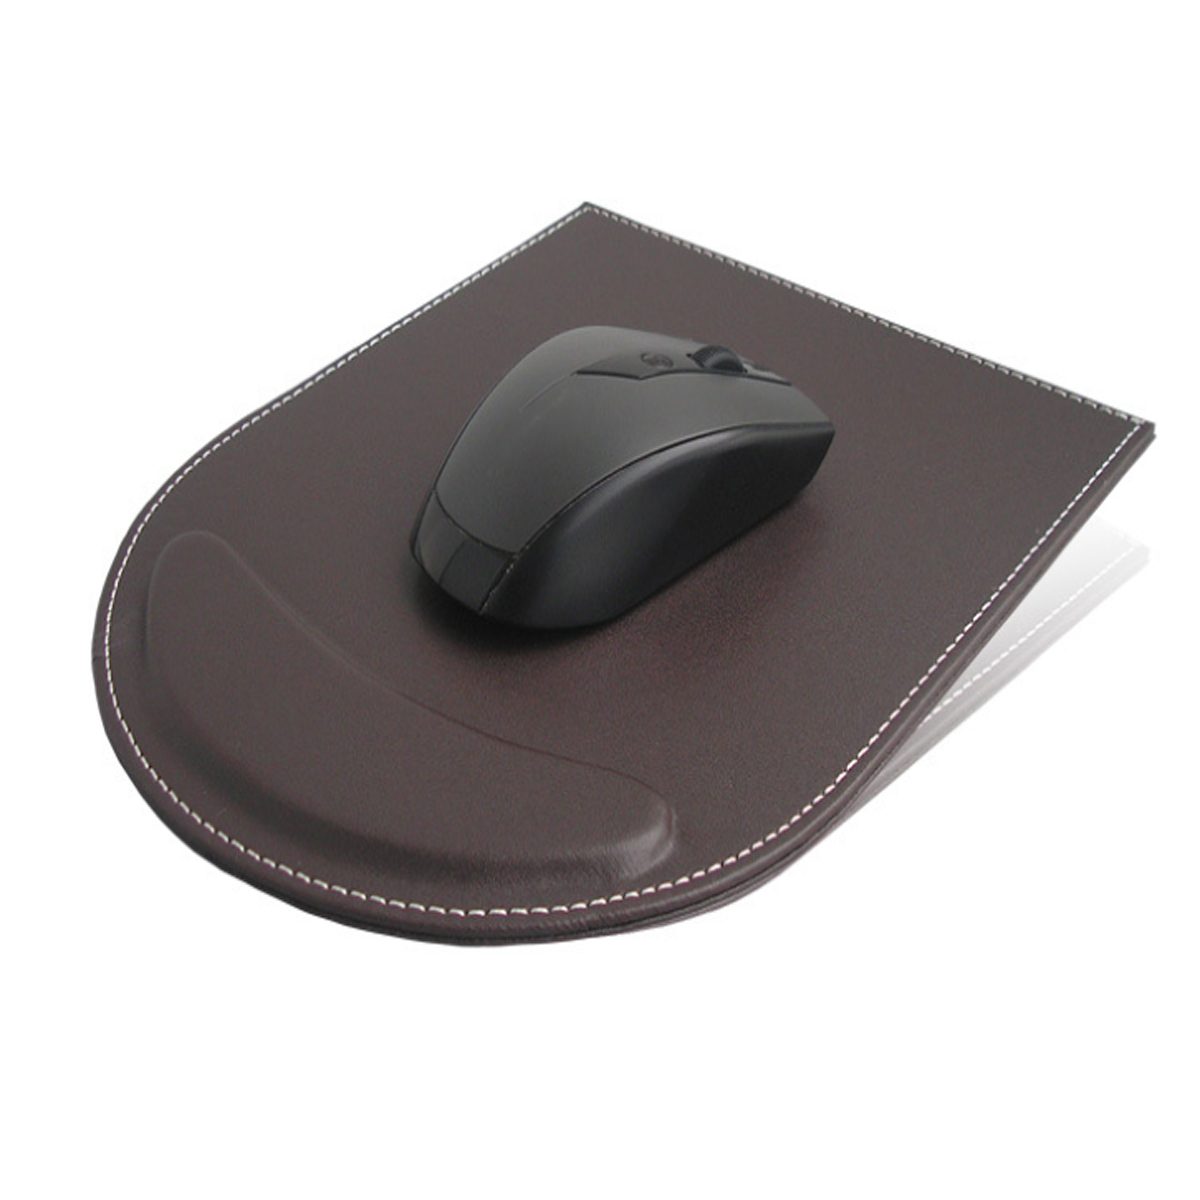 GL-MEZ1033 PU Leather Mouse Pad